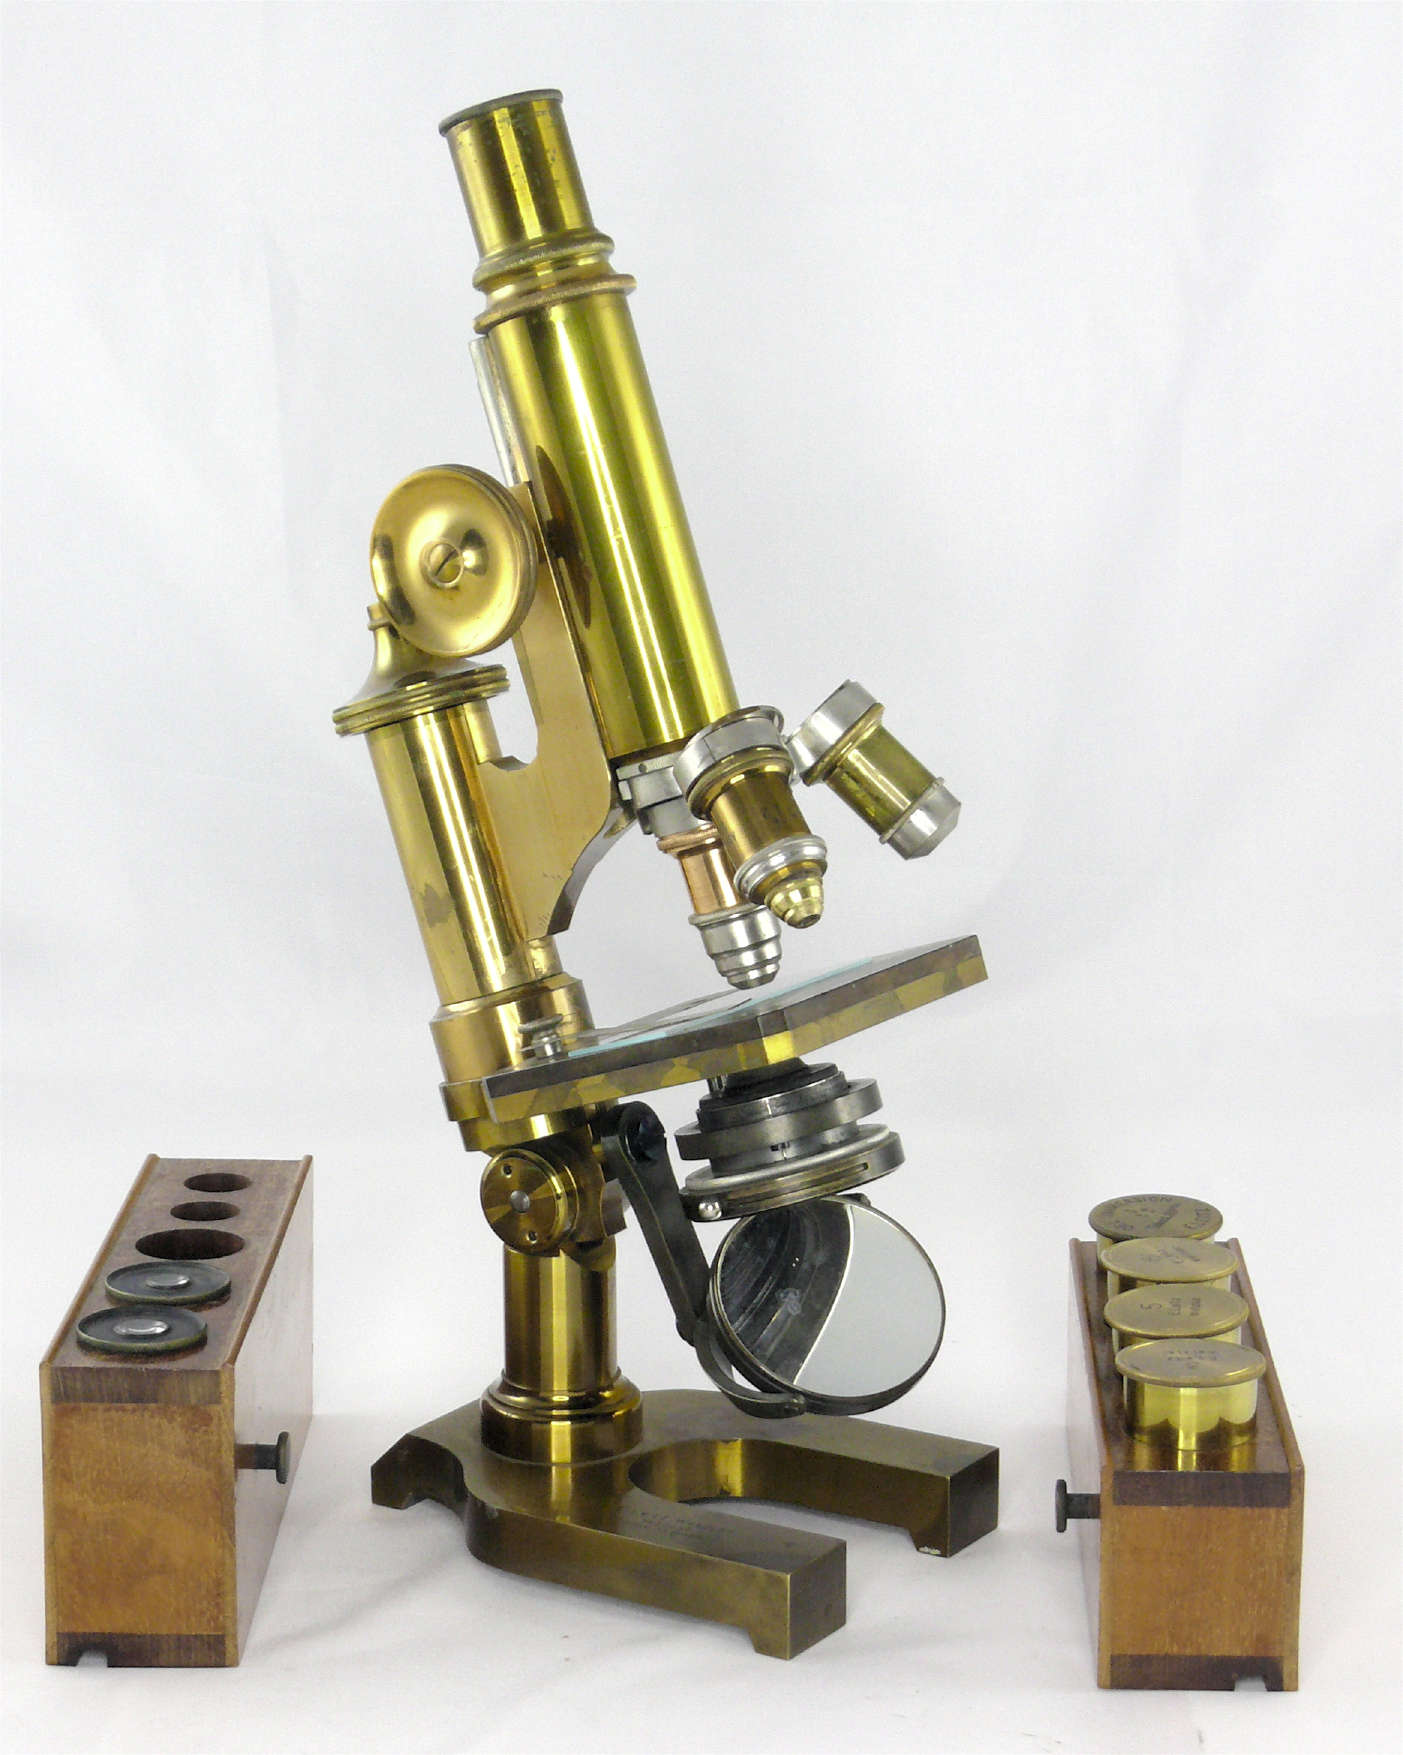 Microscope composé
(inclinable, pied en fer à cheval)